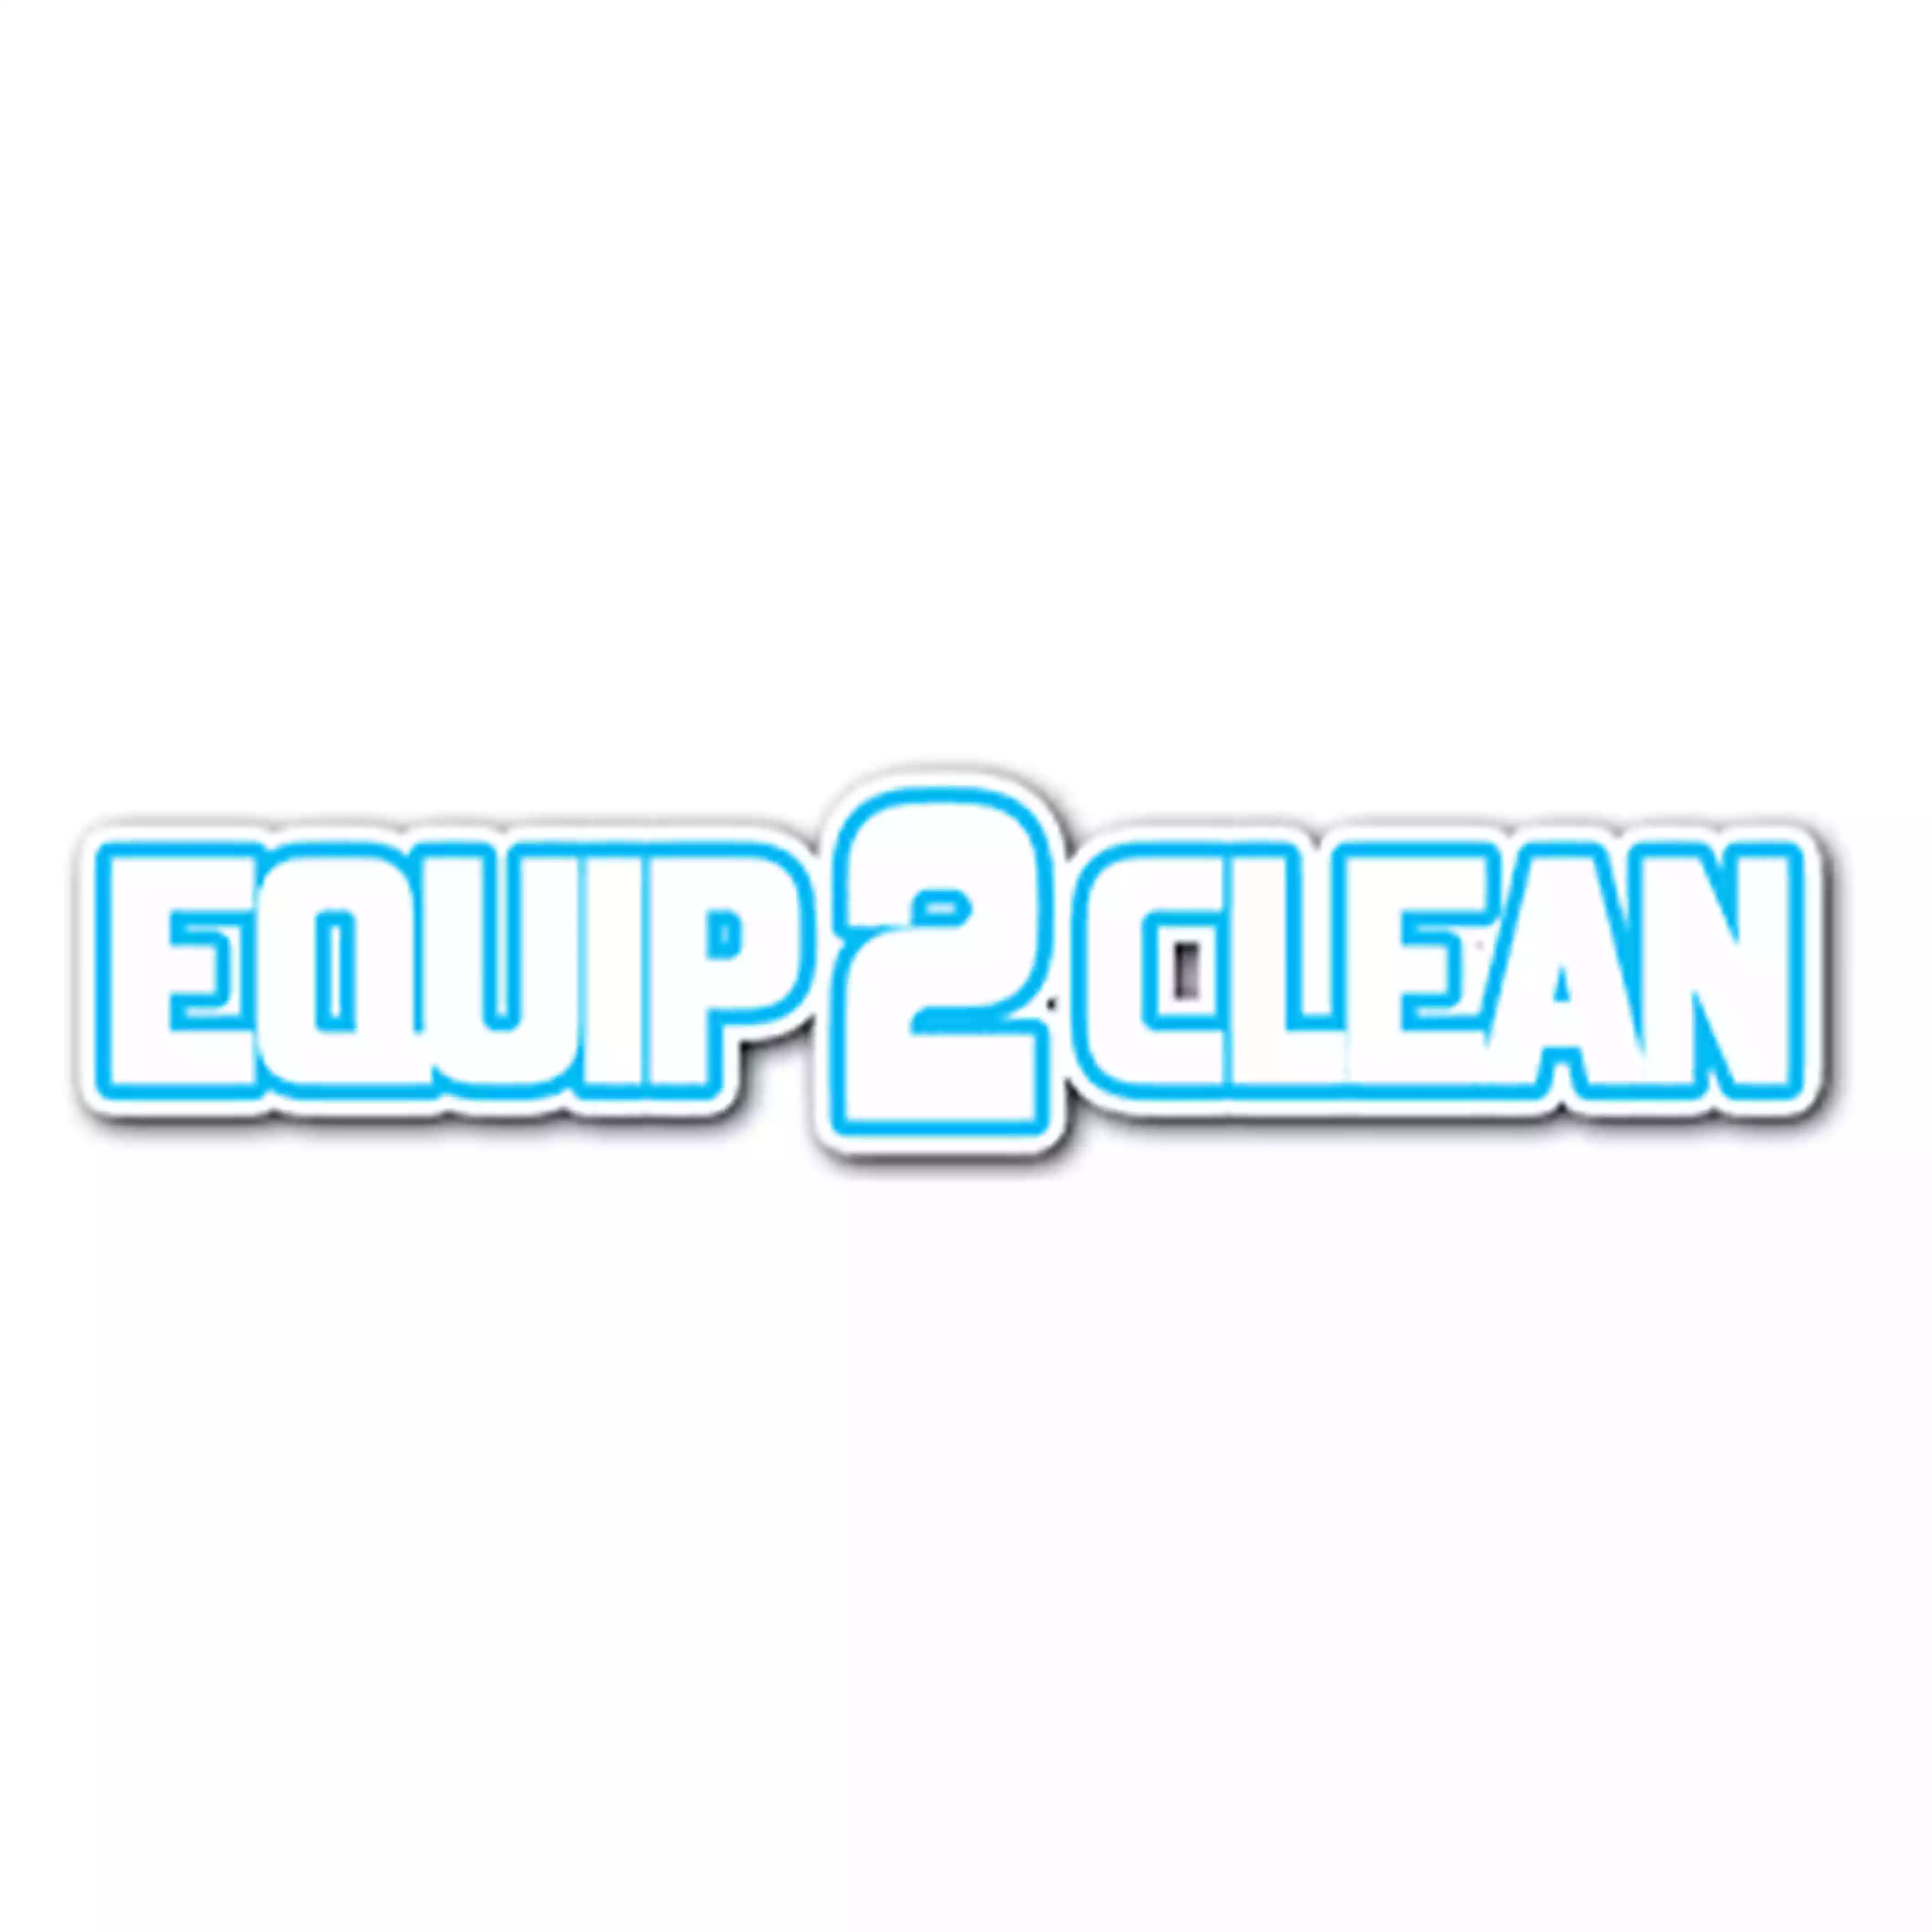 Equip2Clean discount codes